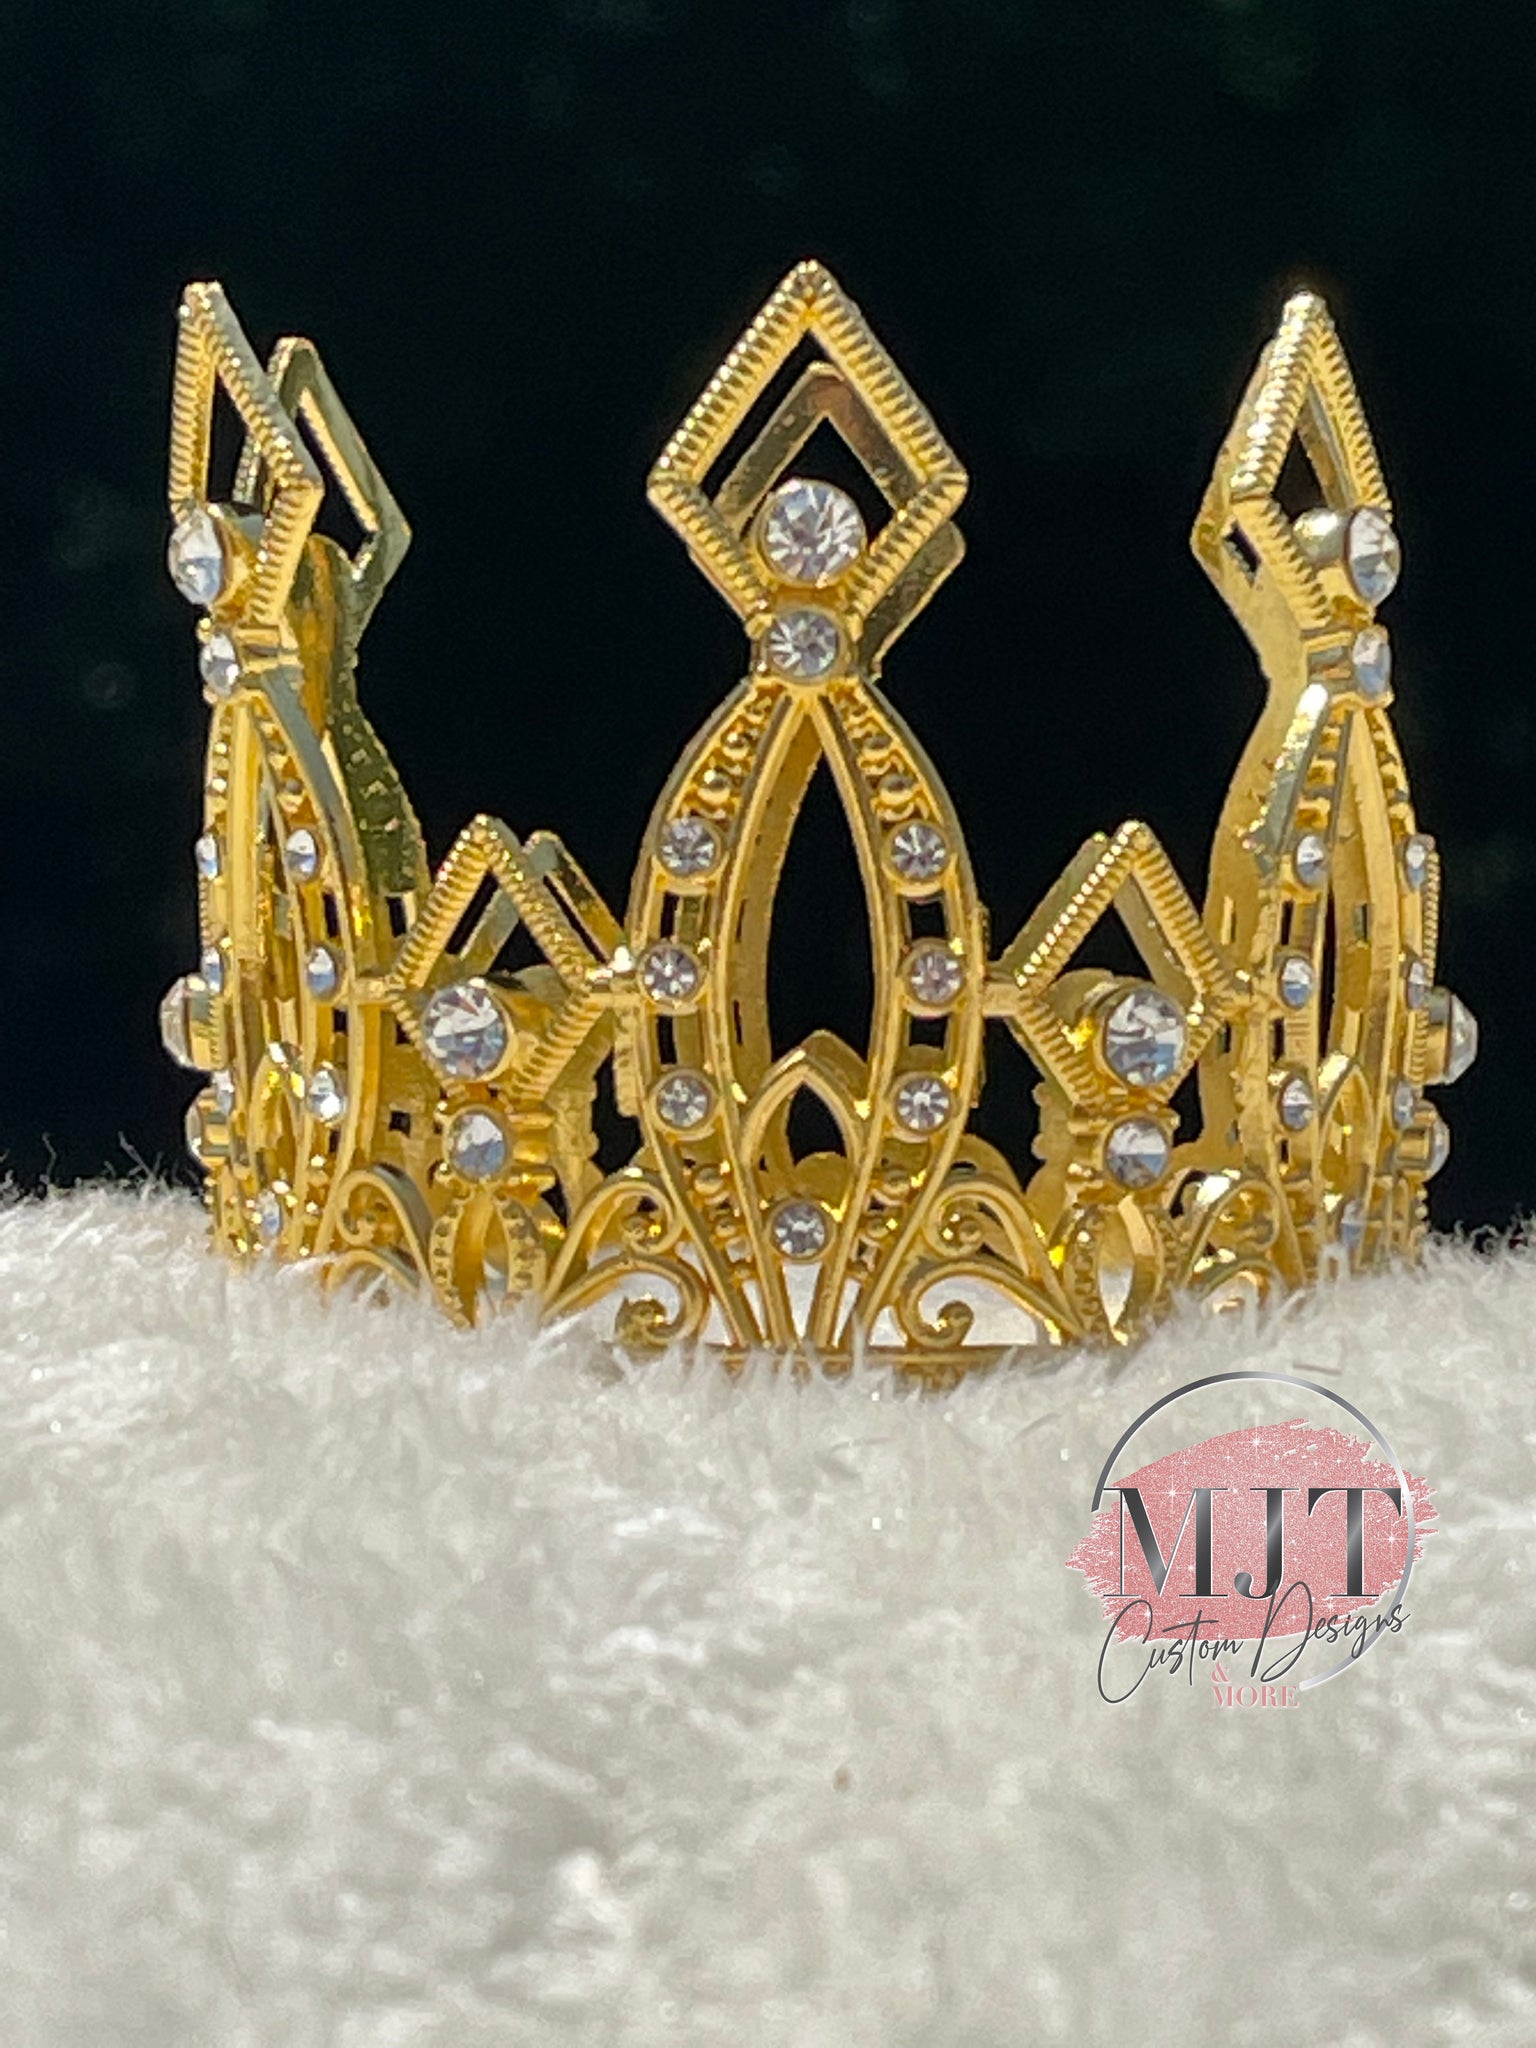 Queen's Crowns - Lid Toppers